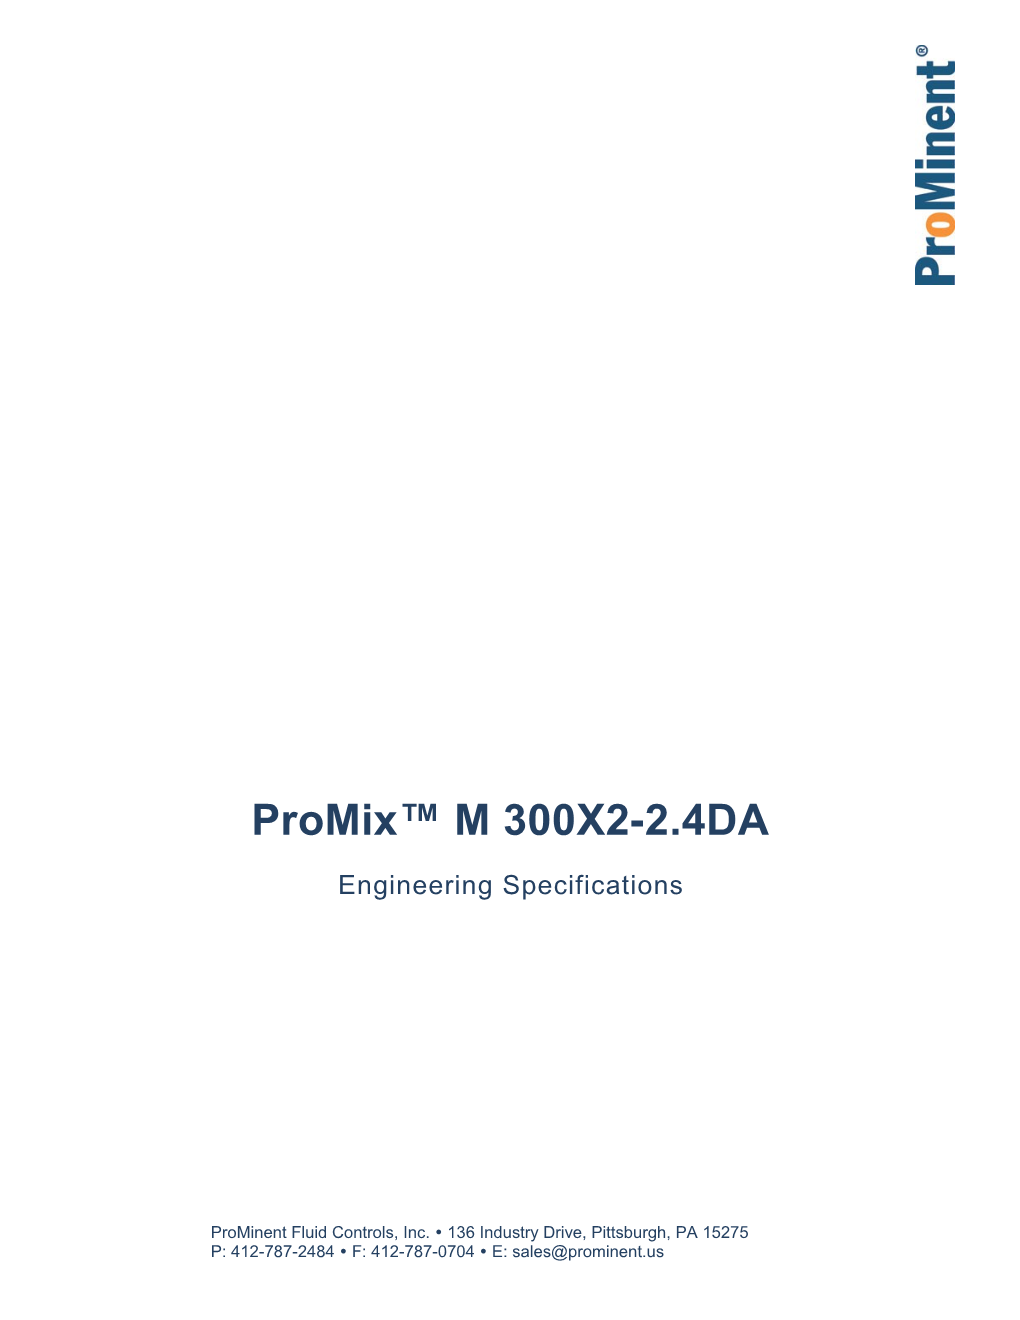 PROMINENT Promix M 300X2-2.4DA SPECIFICATIONS